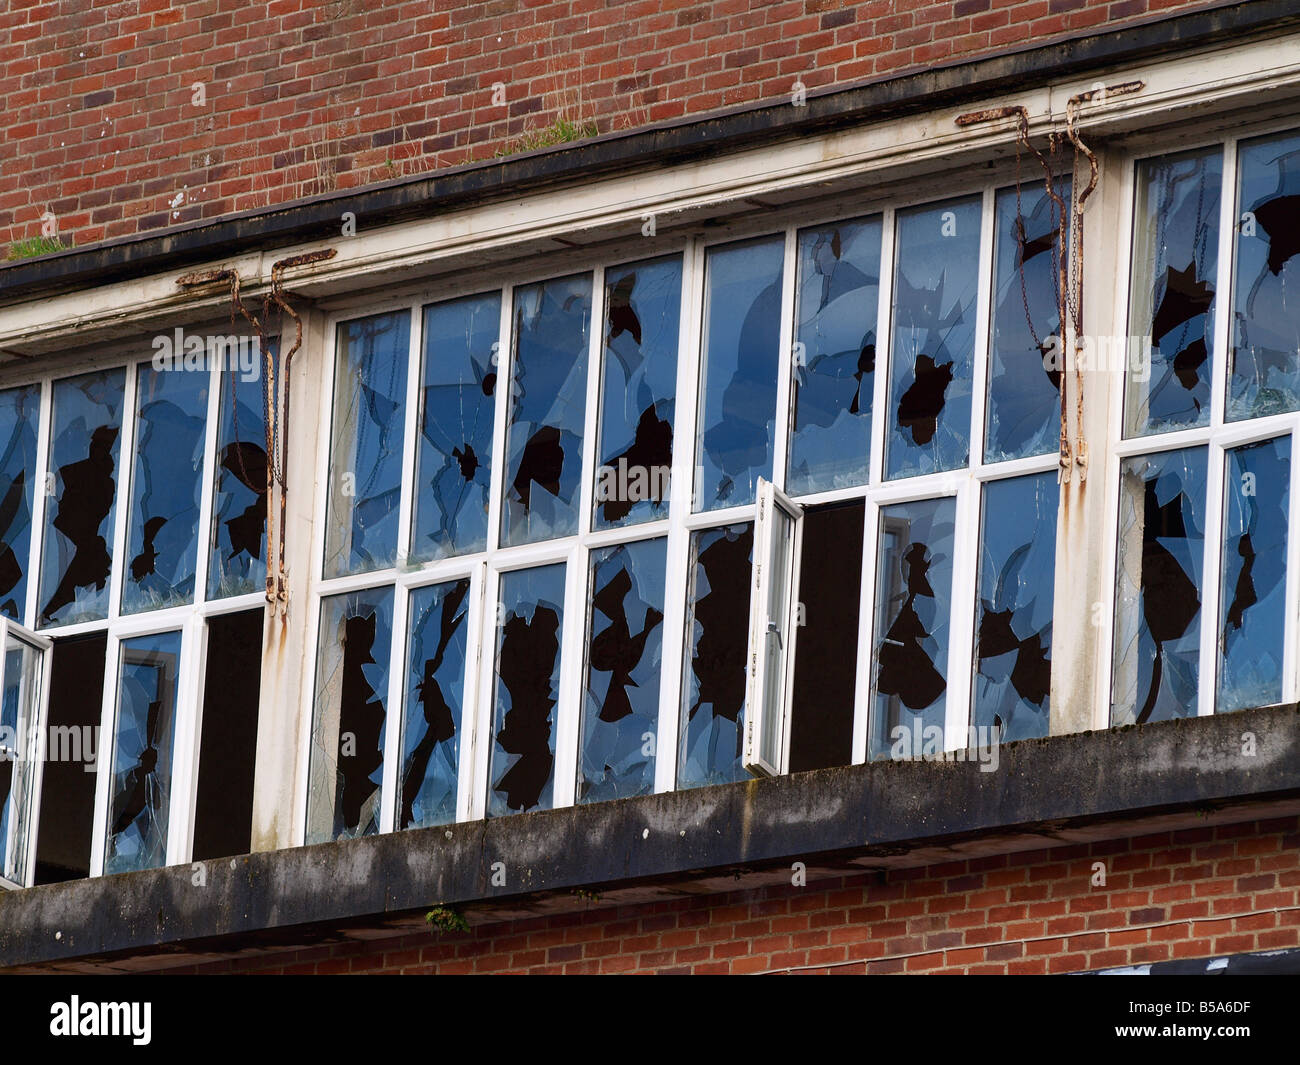 Broken windows on an old brick walled building Stock Photo